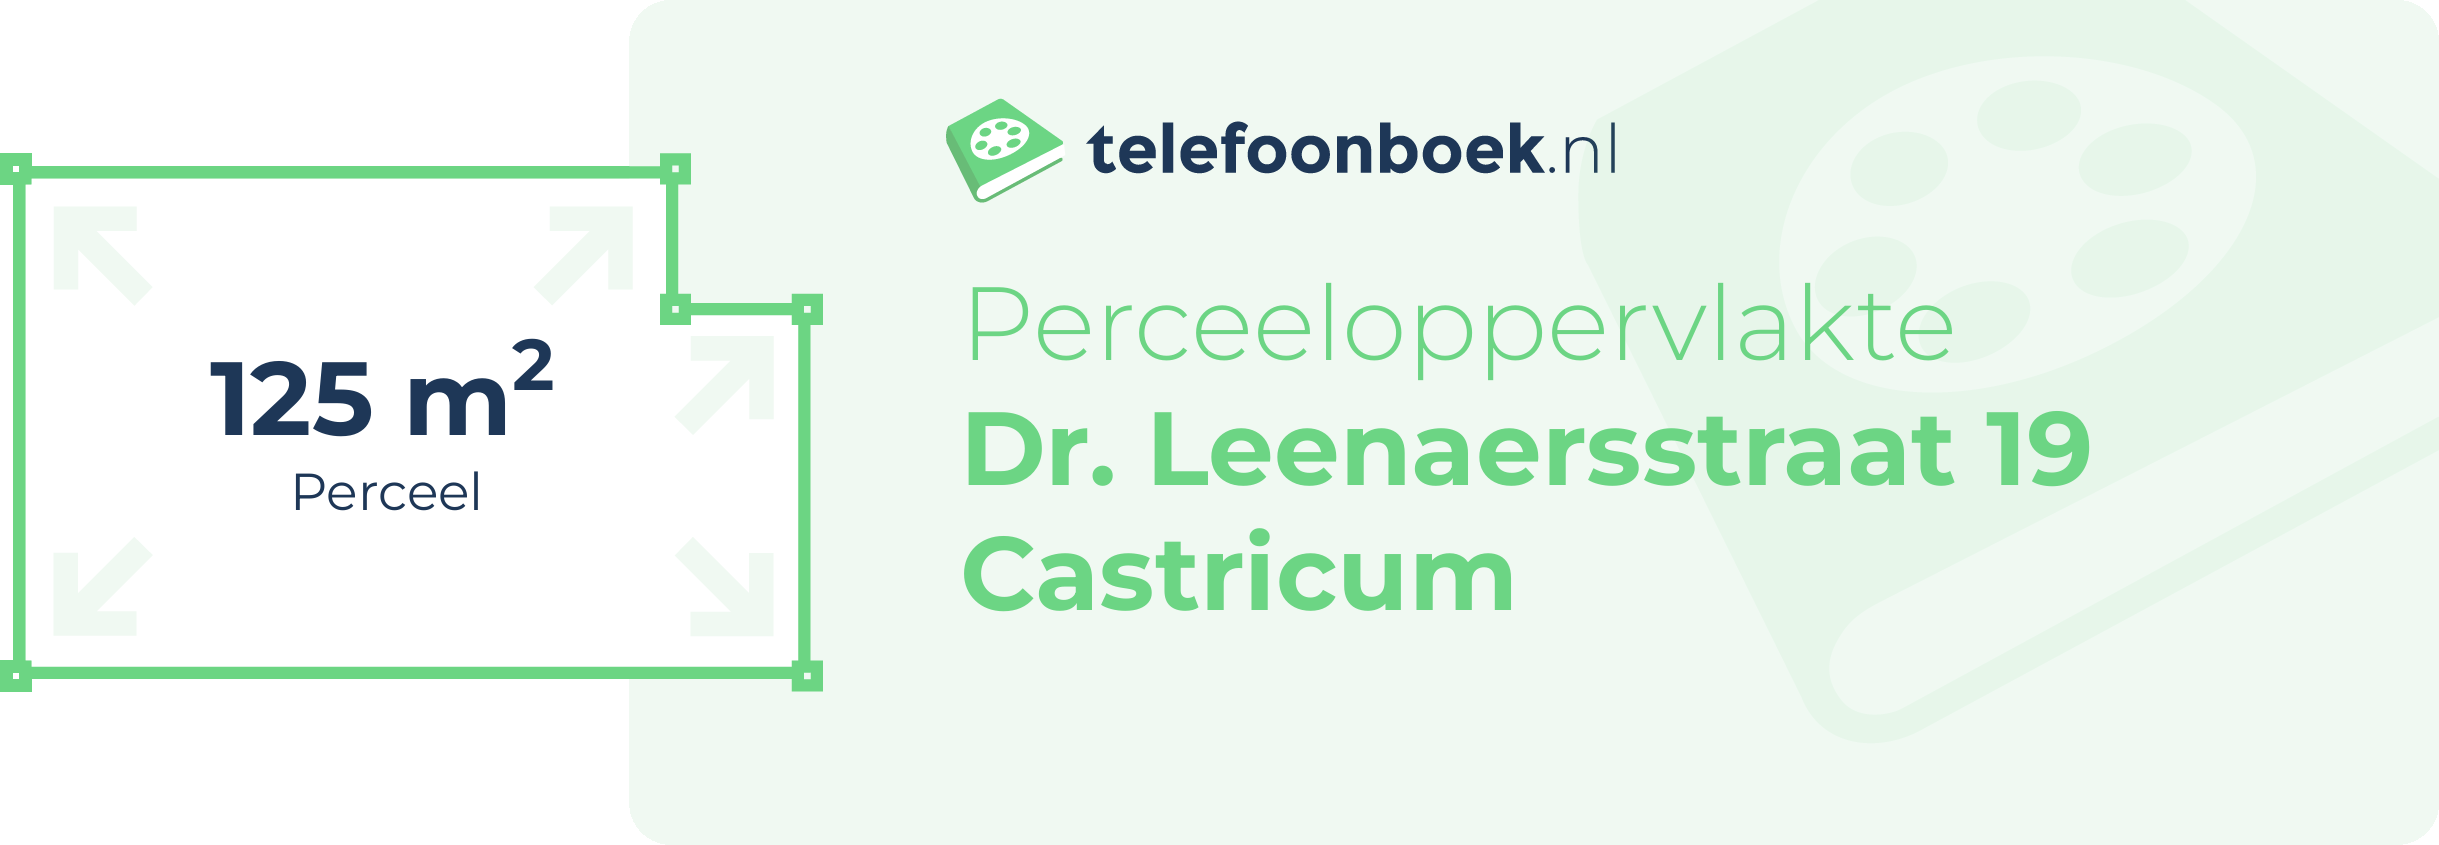 Perceeloppervlakte Dr. Leenaersstraat 19 Castricum